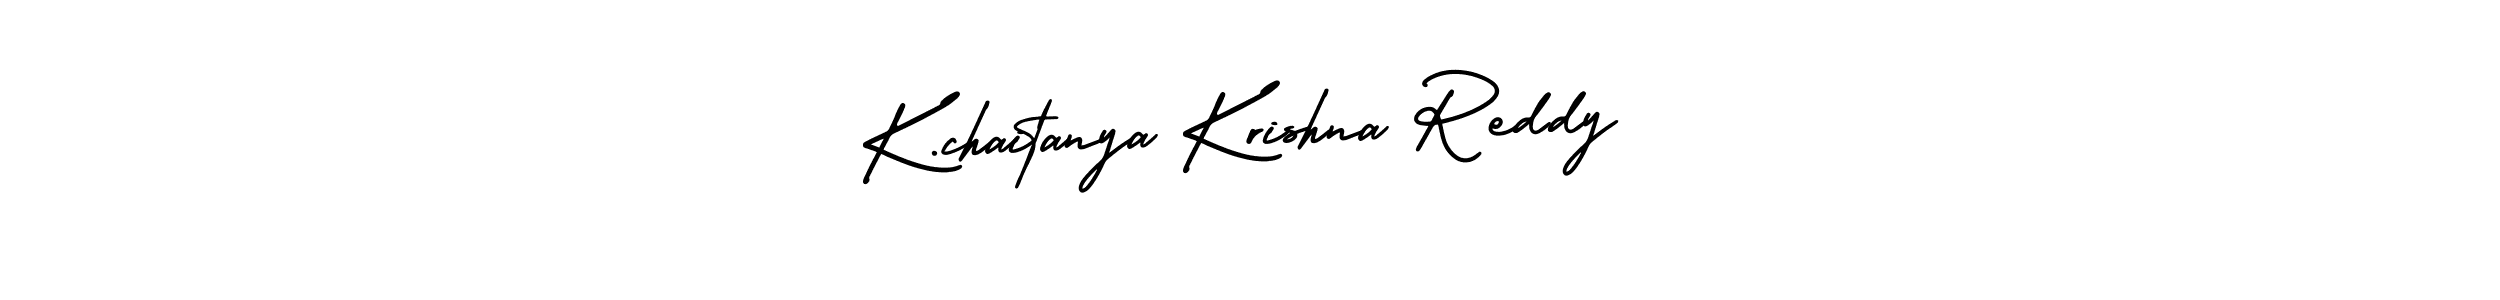 Best and Professional Signature Style for K.chaitanya Krishna Reddy. AmerikaSignatureDemo-Regular Best Signature Style Collection. K.chaitanya Krishna Reddy signature style 3 images and pictures png